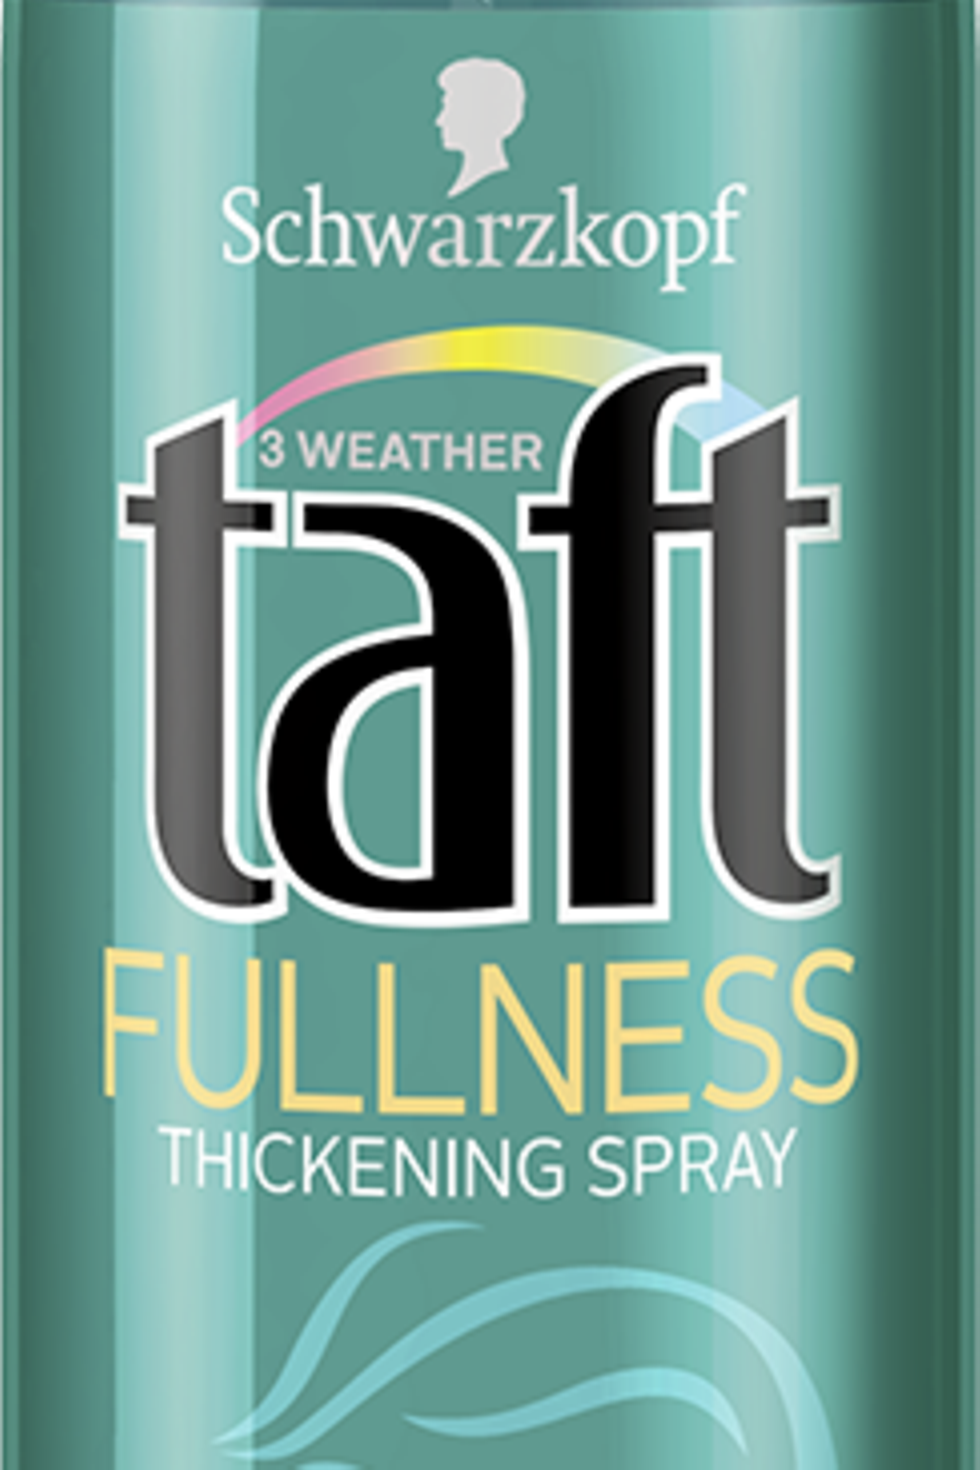 Taft FULLNESS spray nadajacy objętość, 150 ml